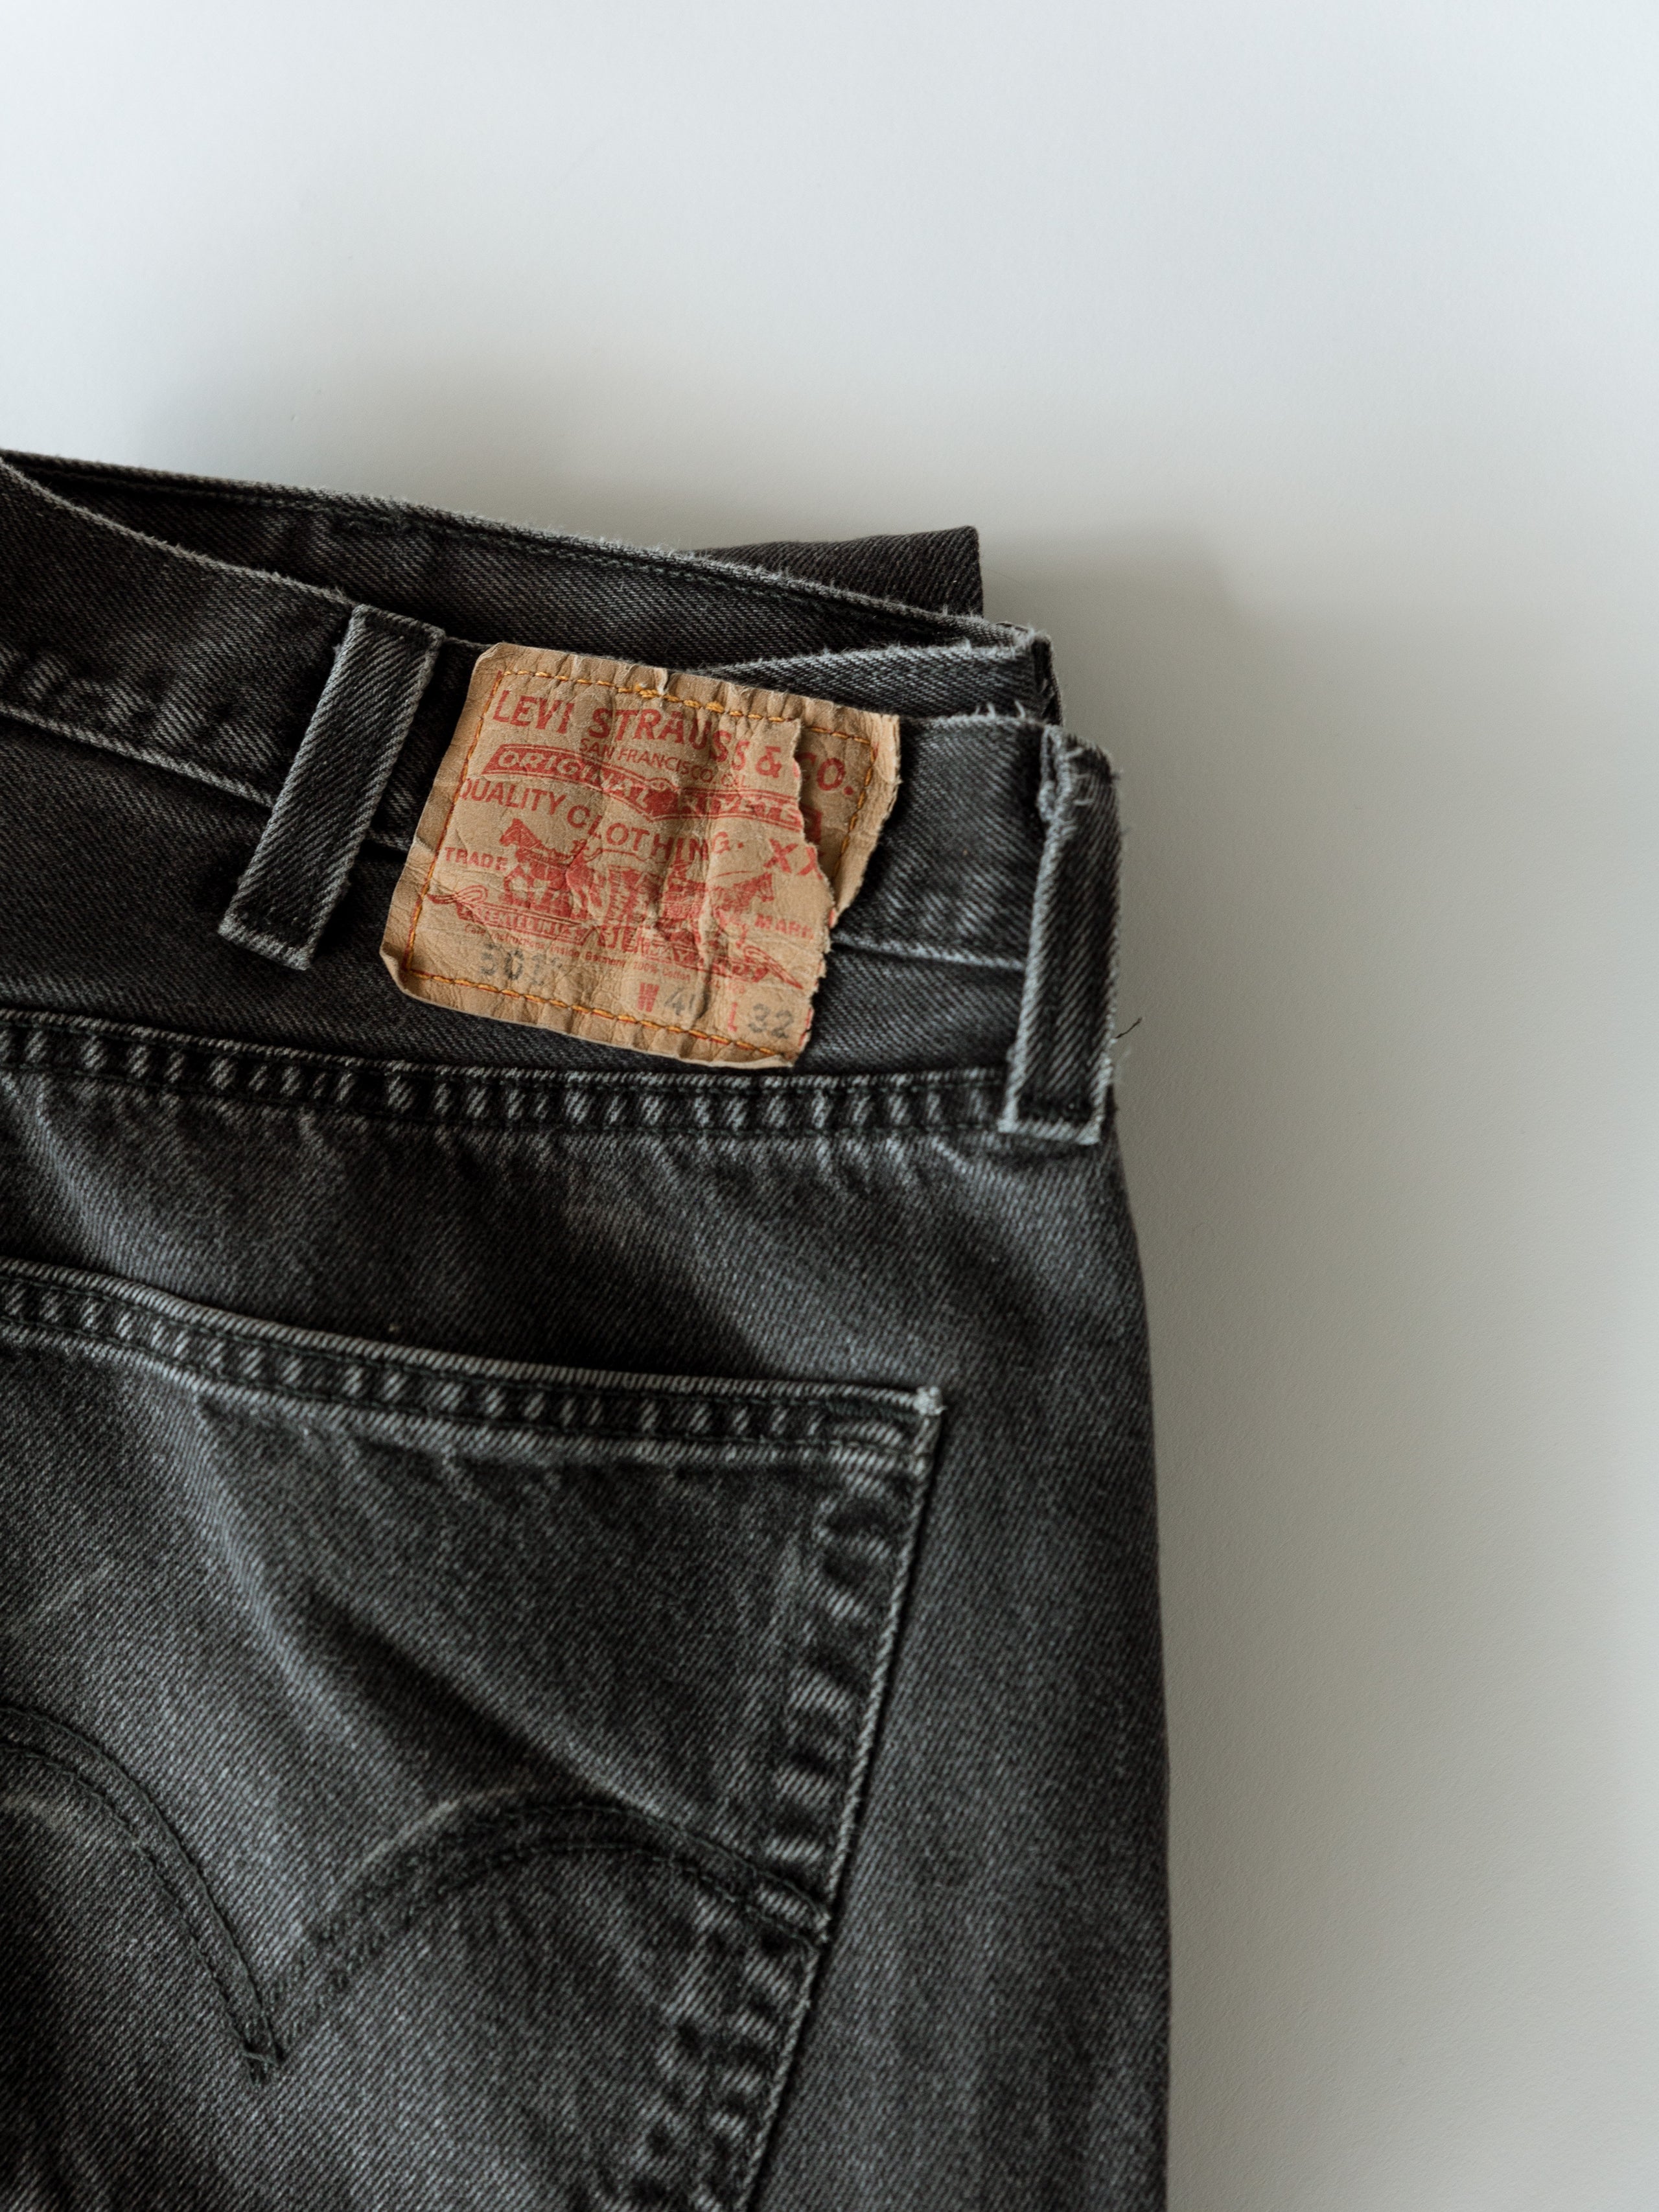 Jeans & Pants – Saybrook Sunday Boutique